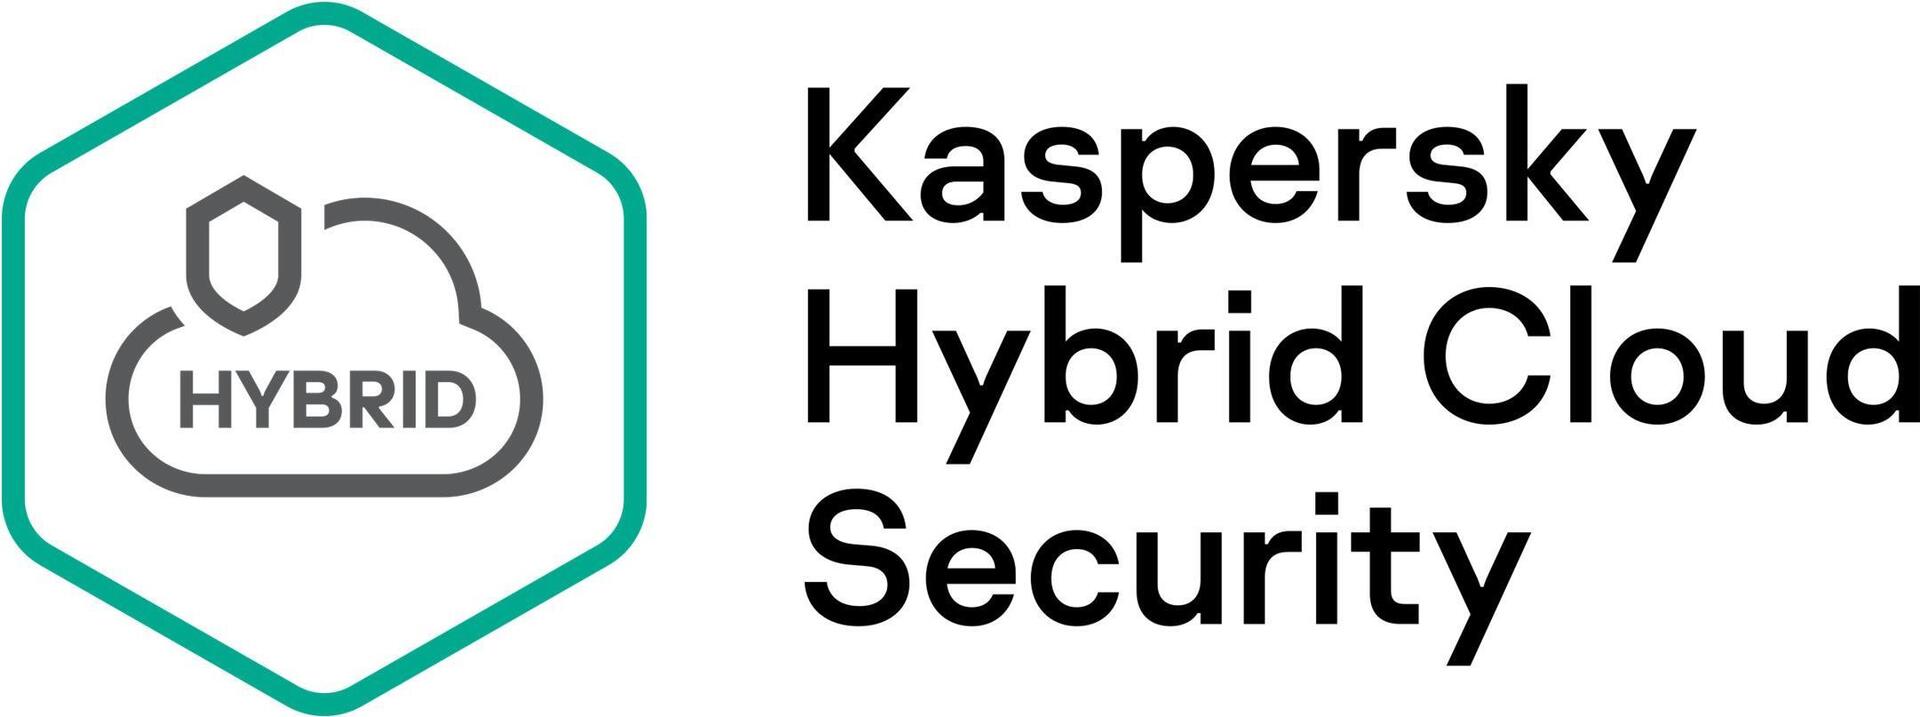 Kaspersky Hybrid Cloud Security Enterprise Edition, Desktop (KL4153XANFR)